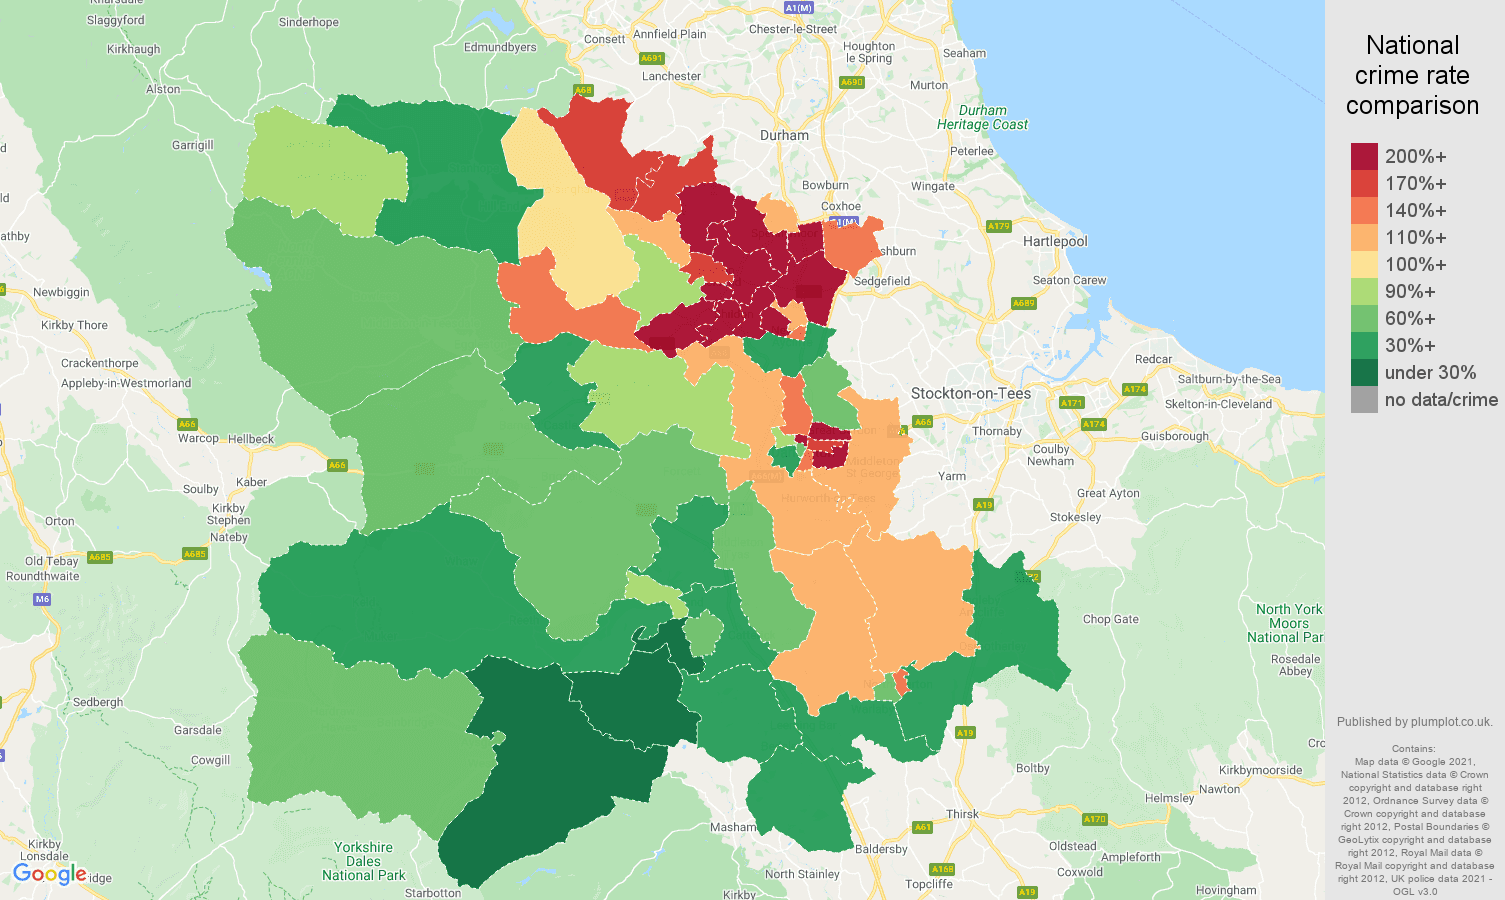 Darlington criminal damage and arson crime rate comparison map